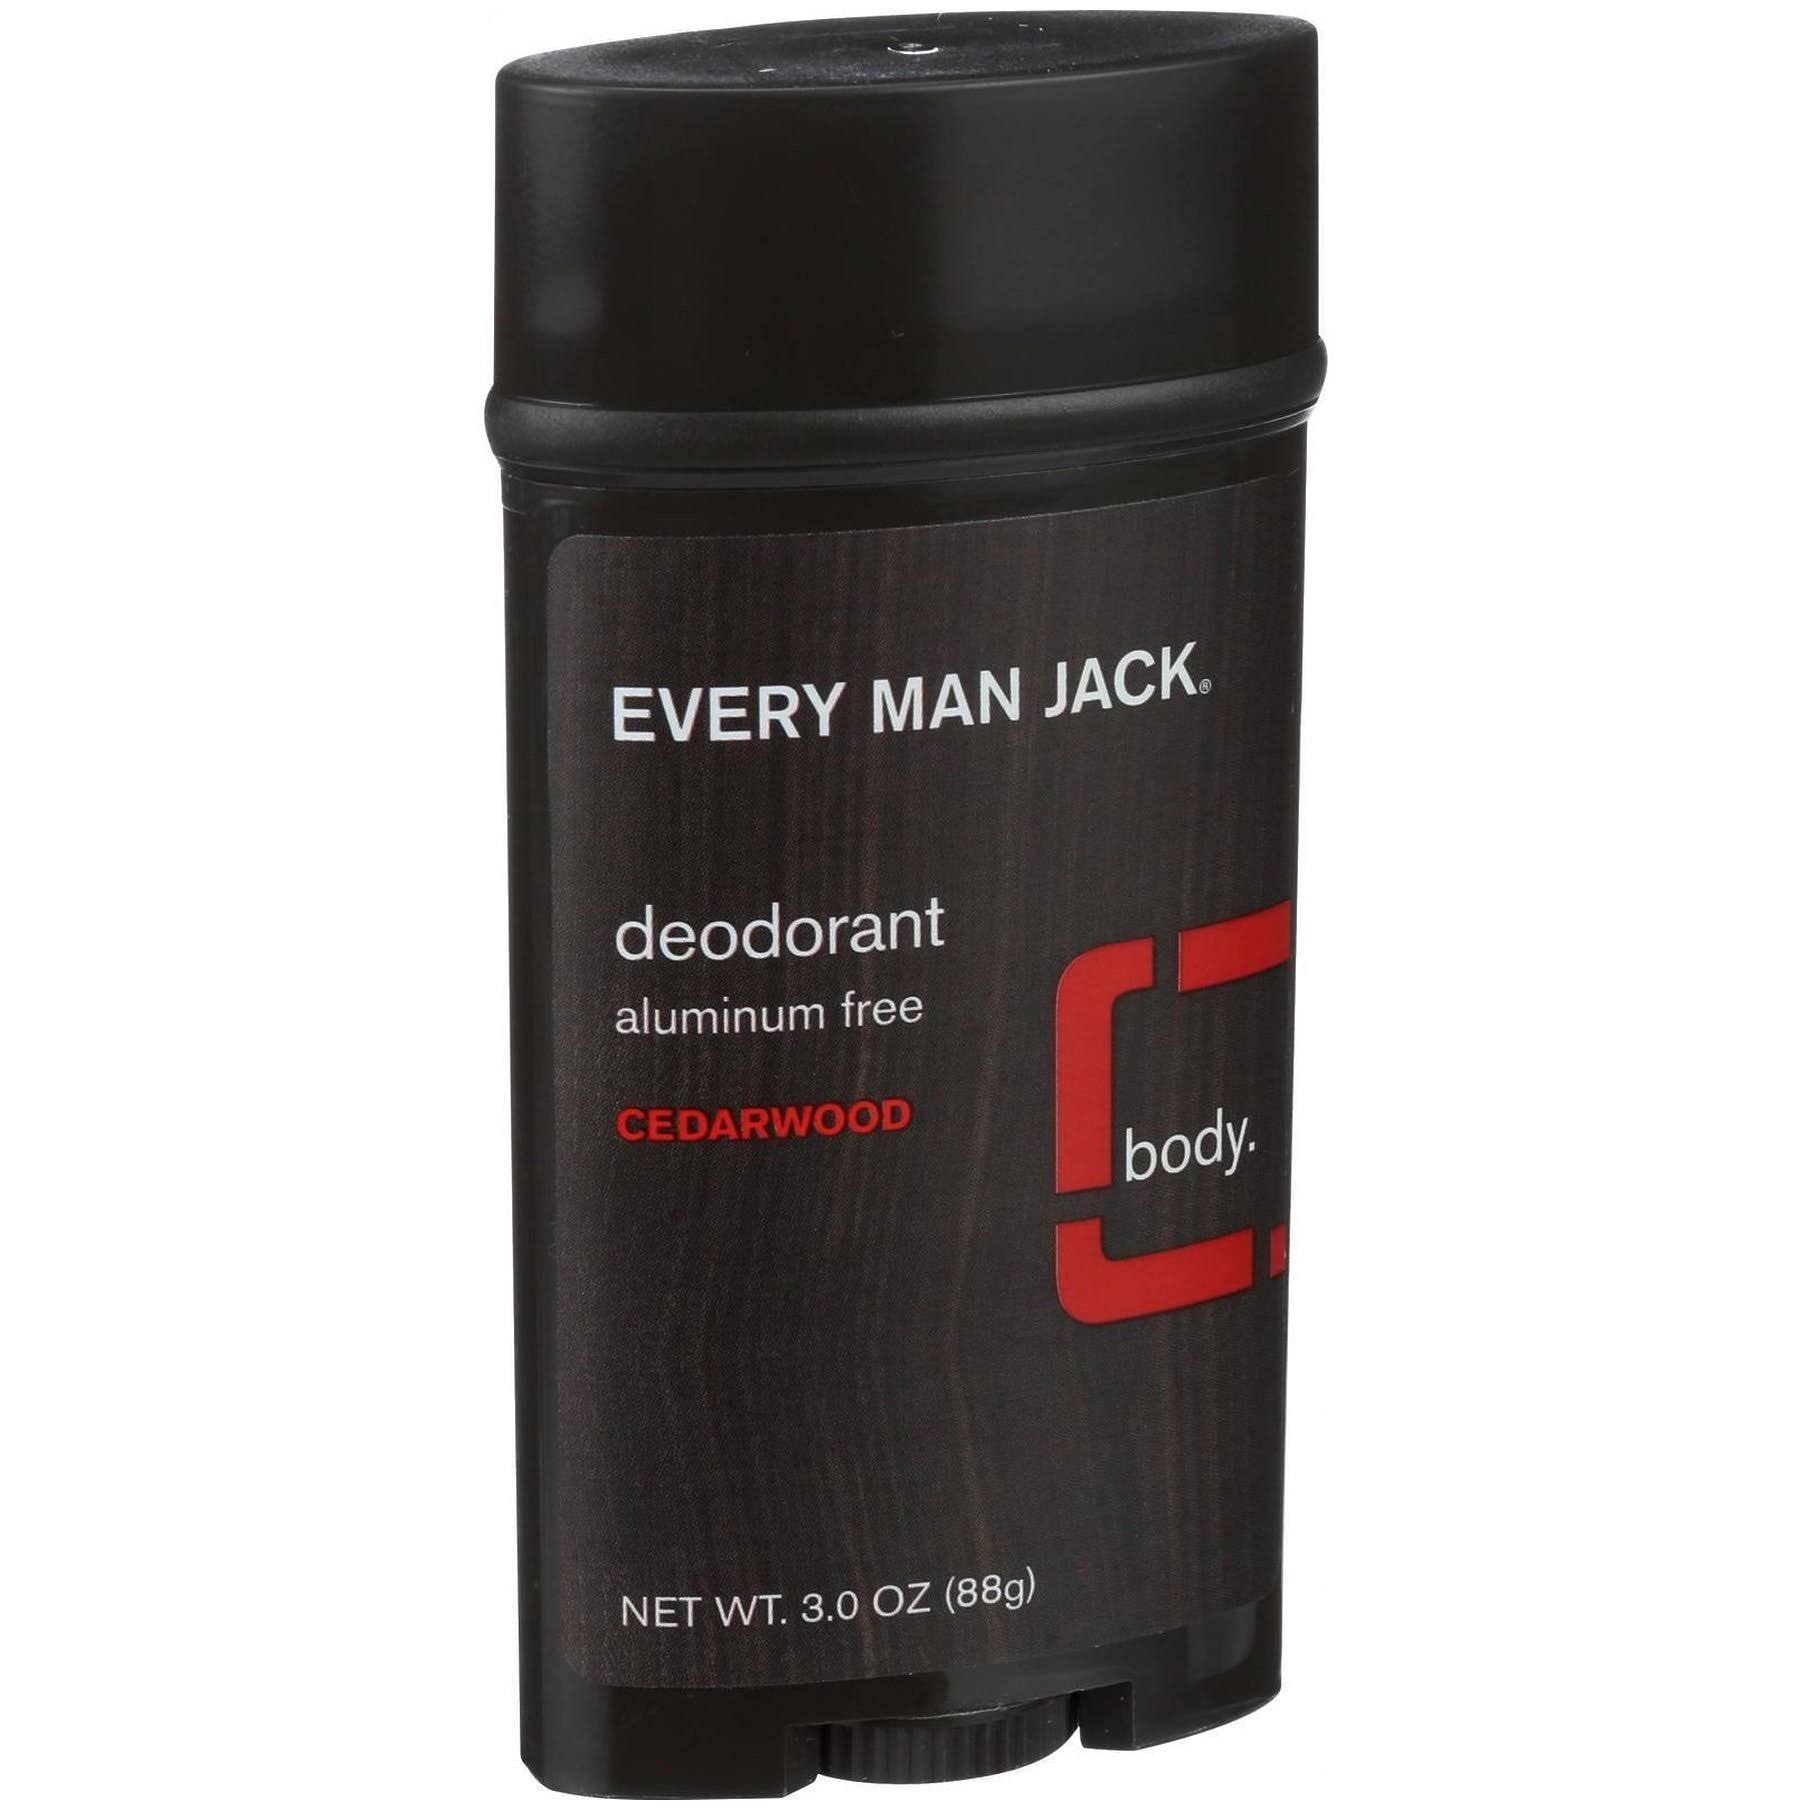 Every Man Jack Deodorant - Cedarwood, 3.0oz